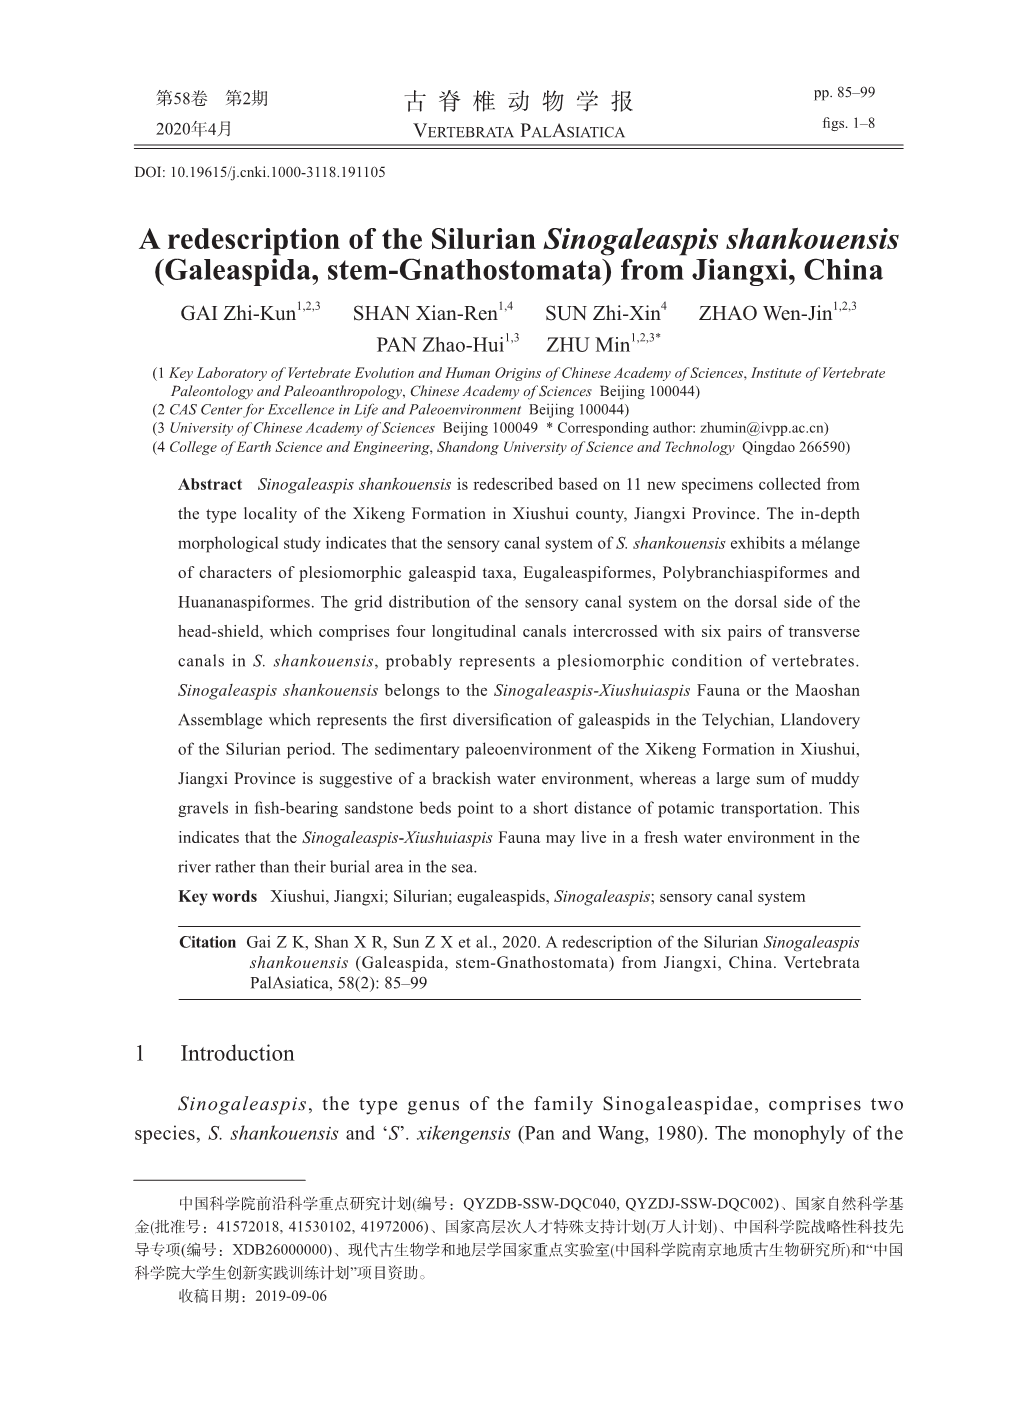 A Redescription of the Silurian Sinogaleaspis Shankouensis